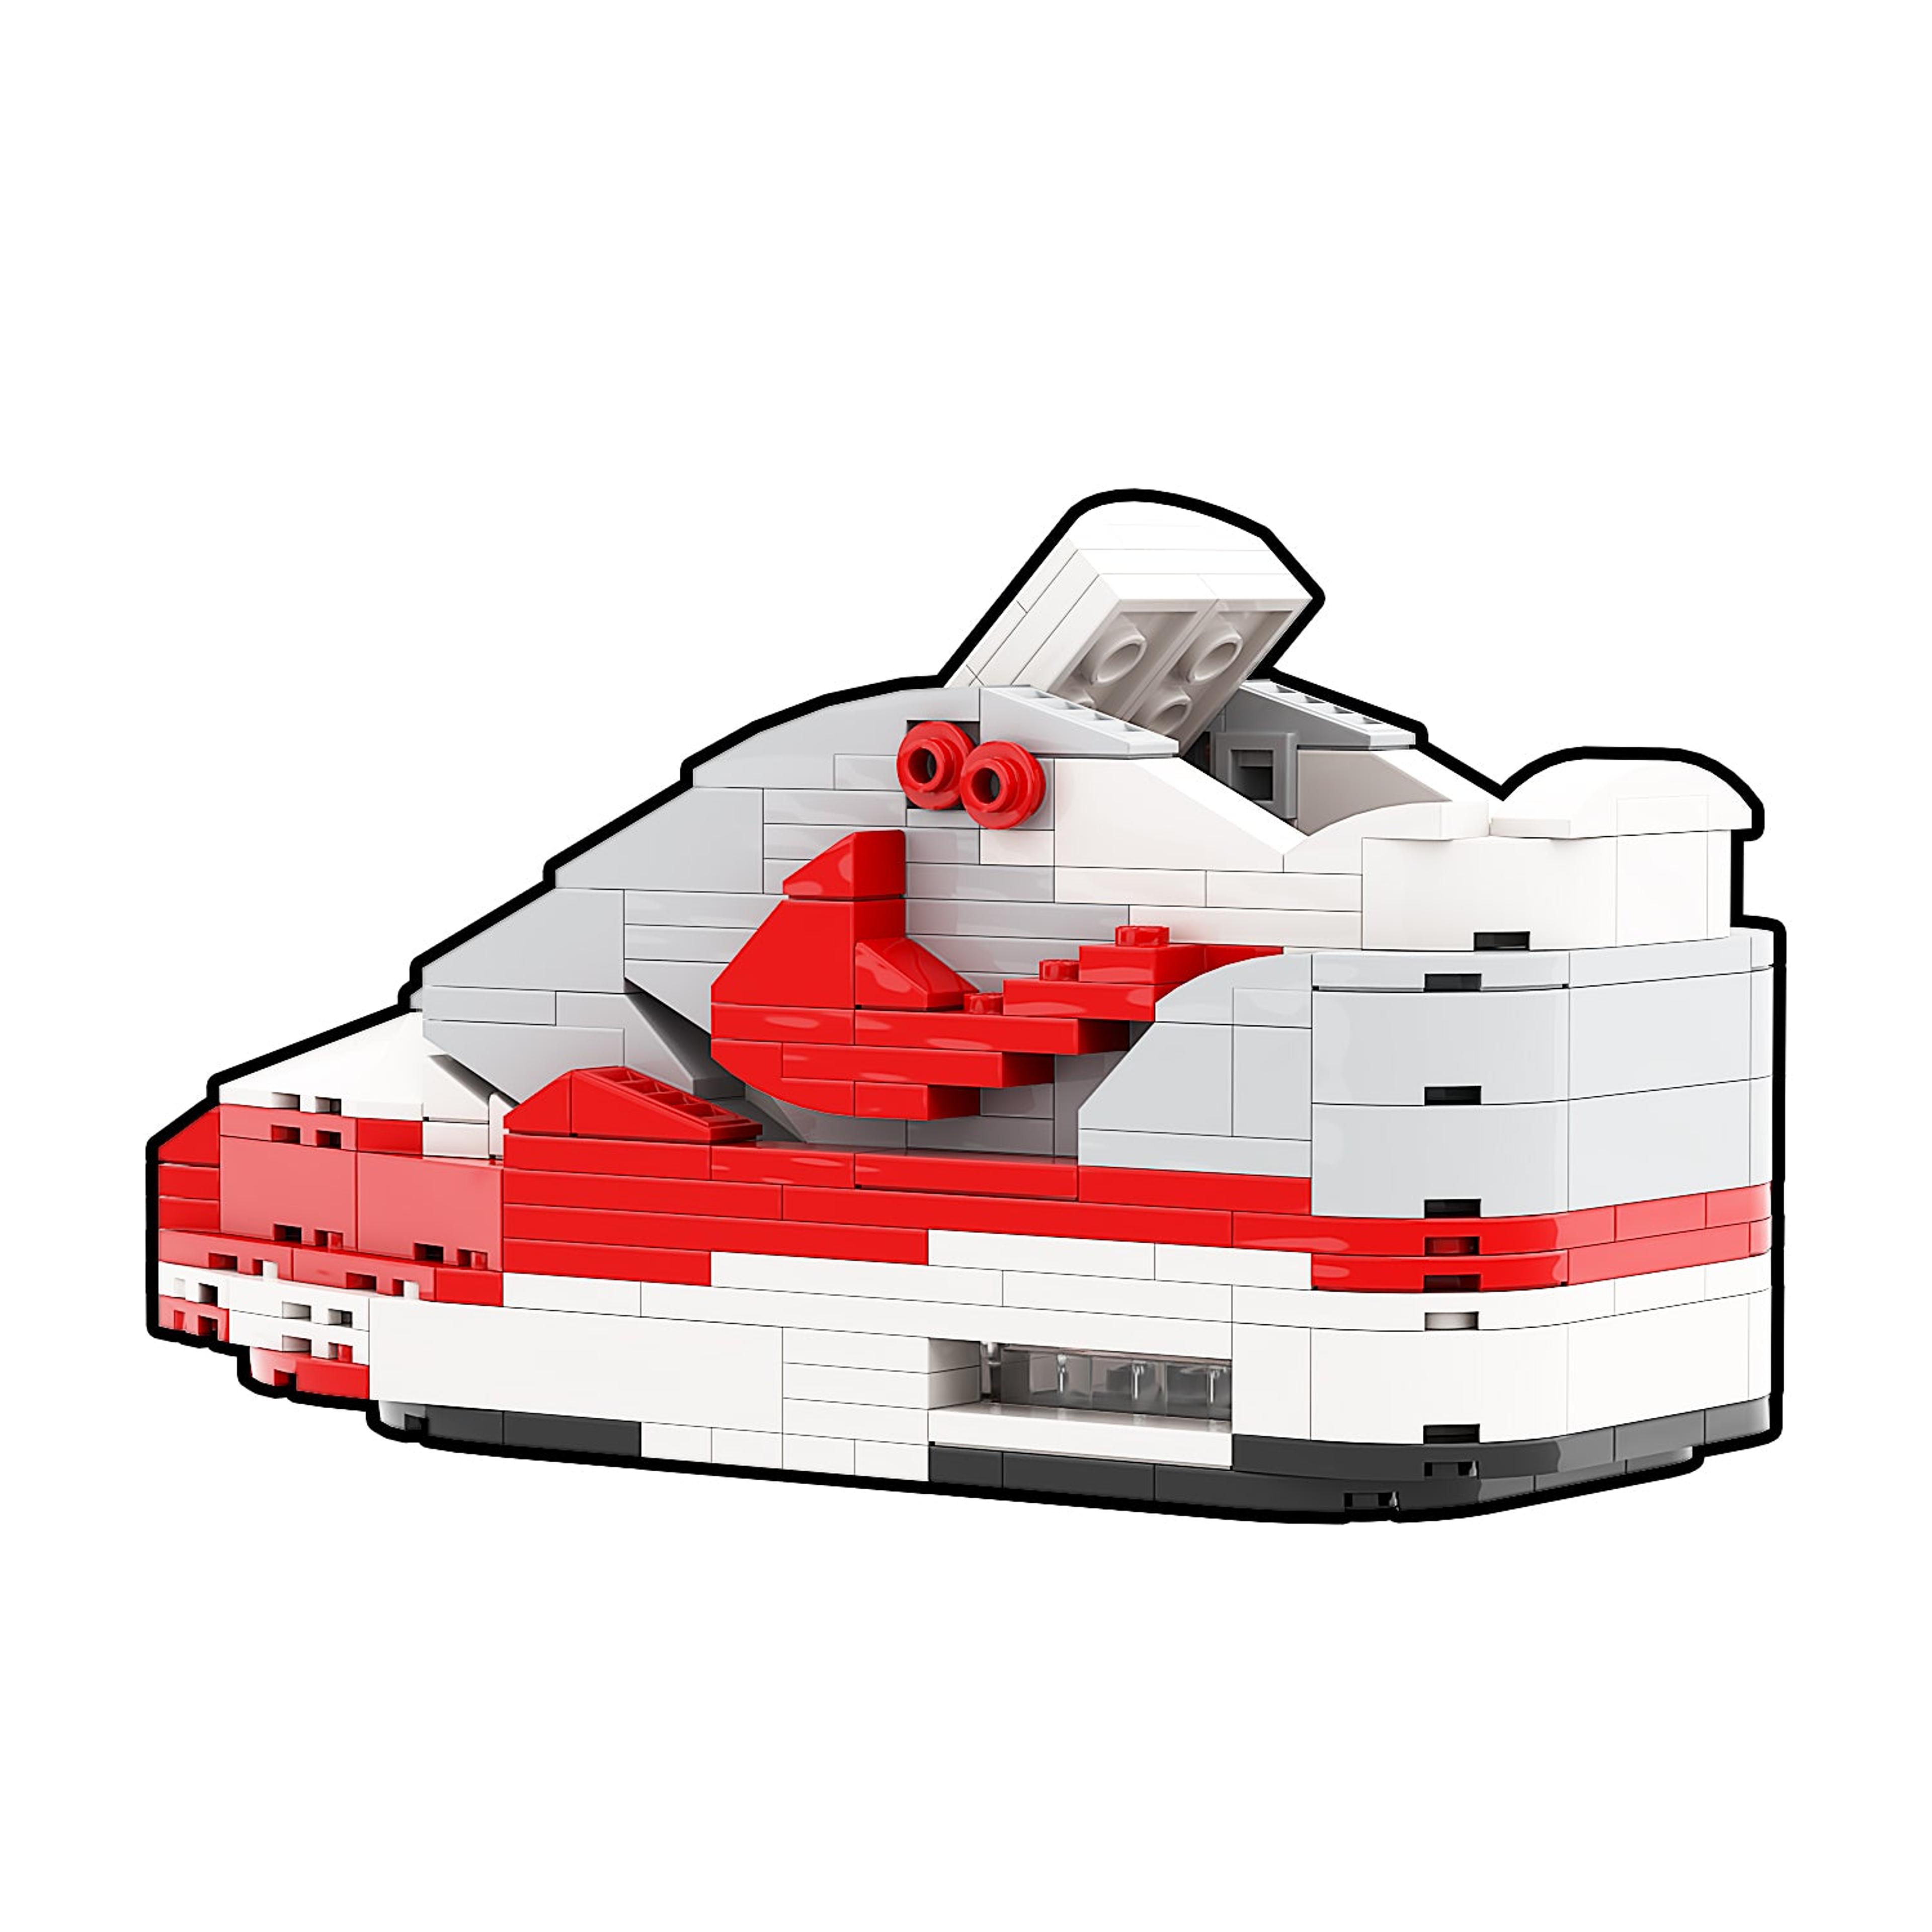 Alternate View 3 of REGULAR "Air Max 1 OG" Sneaker Bricks with Mini Figure